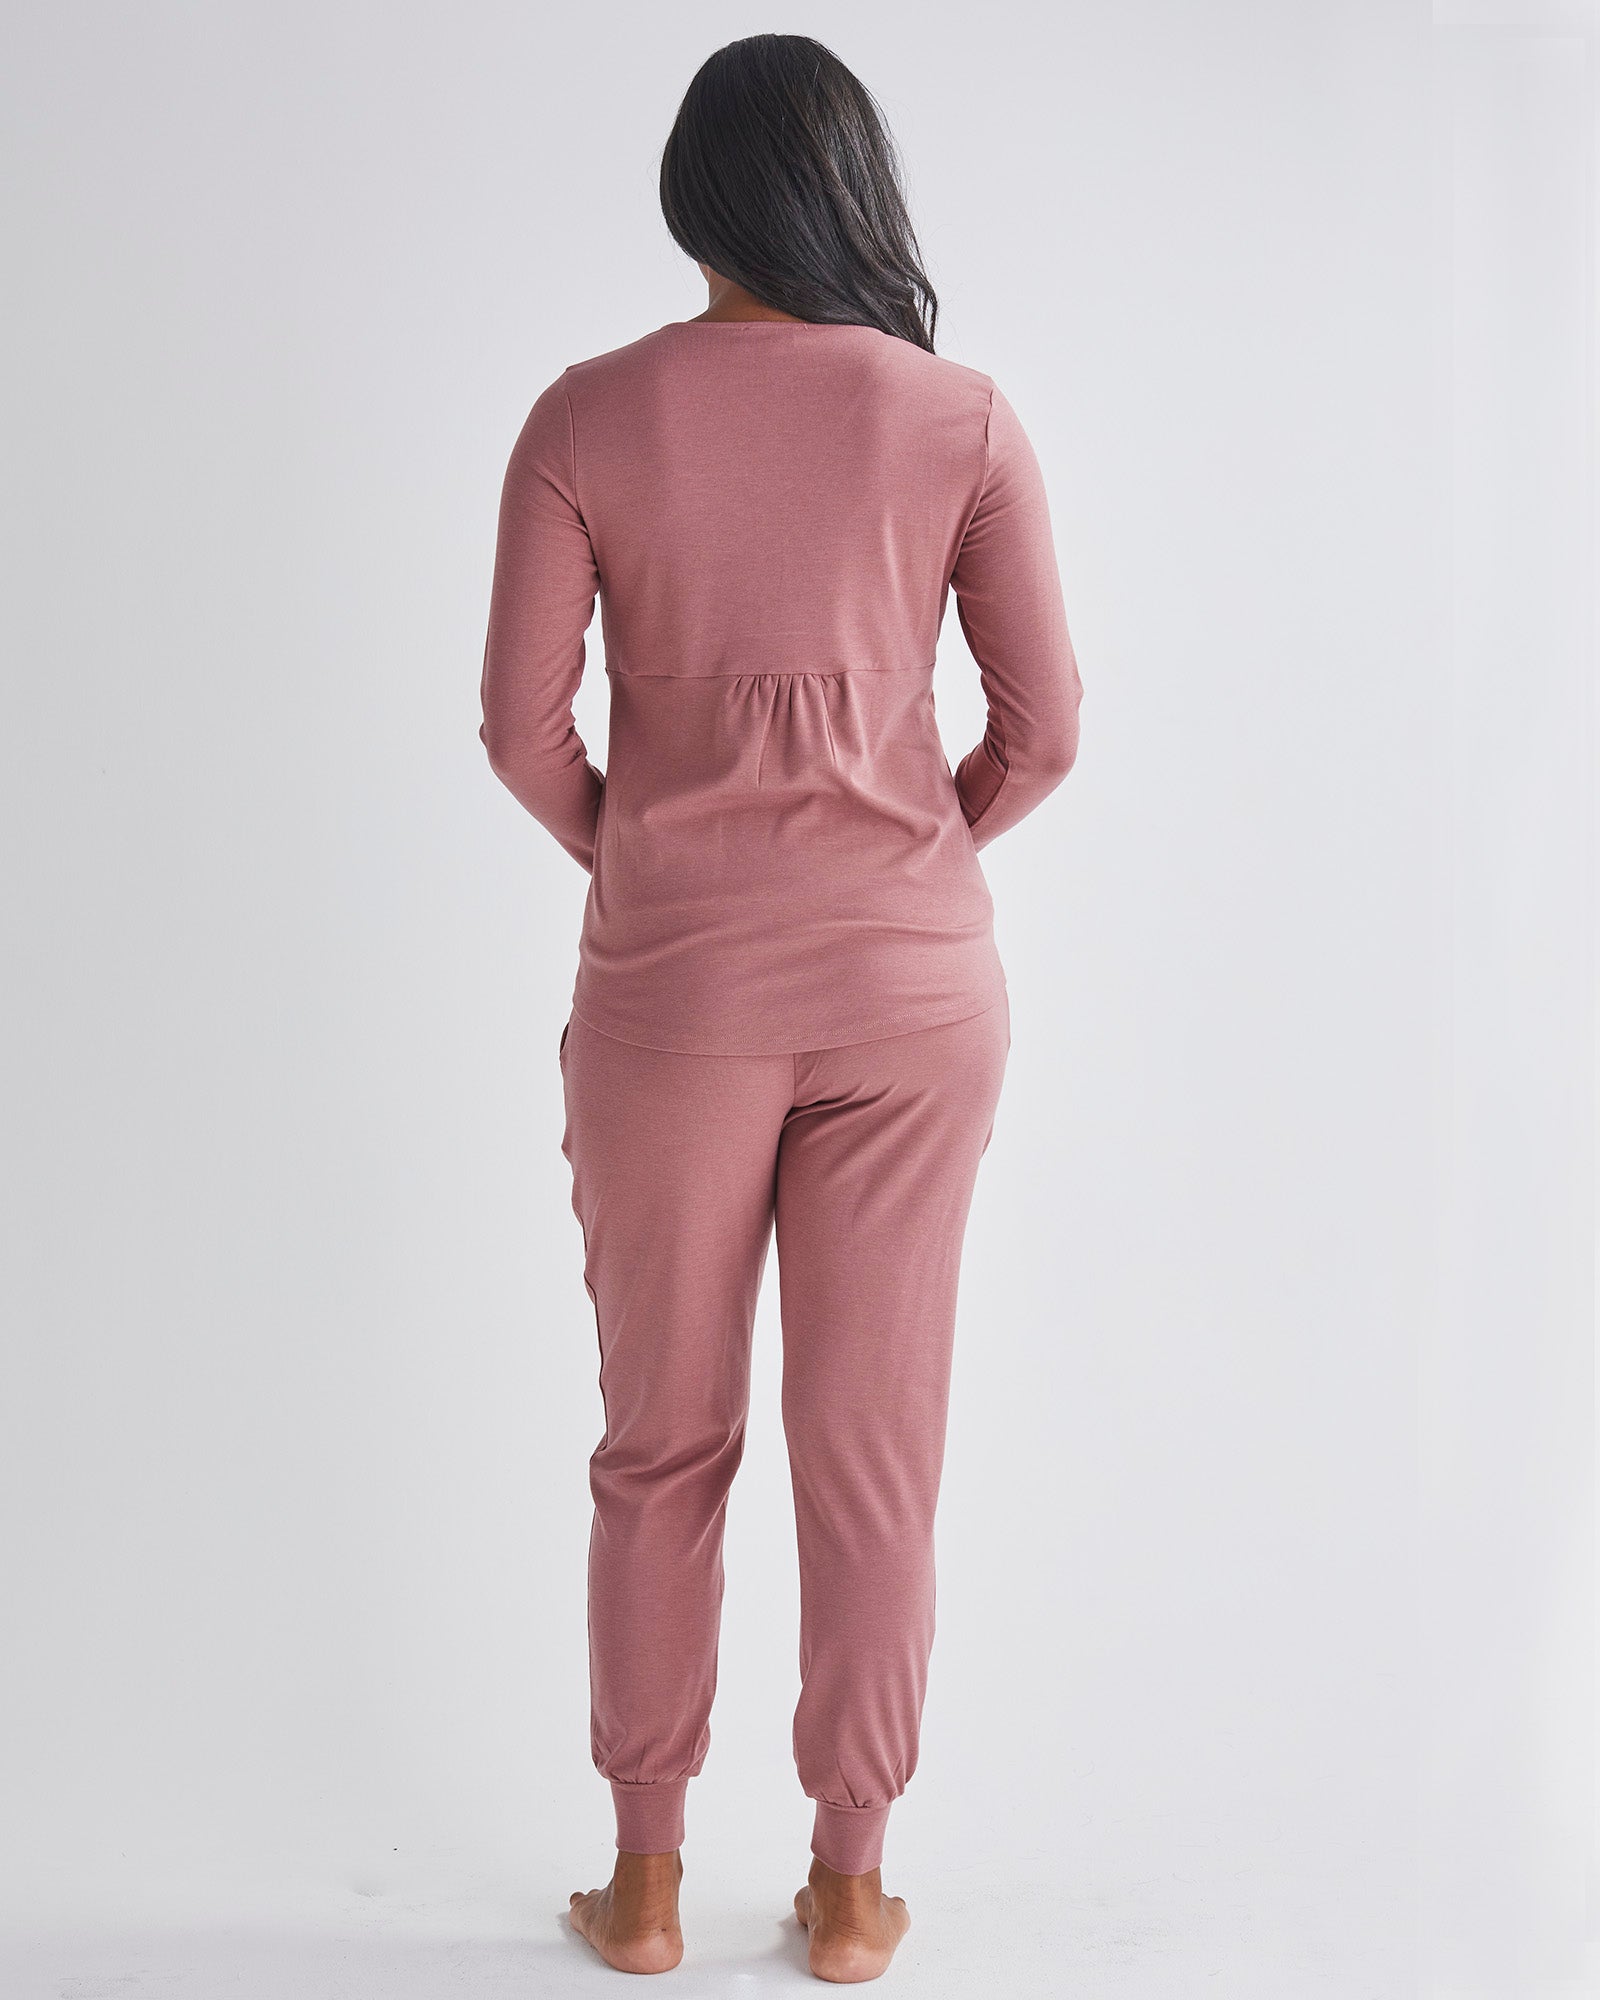 Back View - A Pregnant Woman Wearing 2-Piece Kyra Maternity Loungewear/Sleepwear PJ set in Pink from Angel maternity